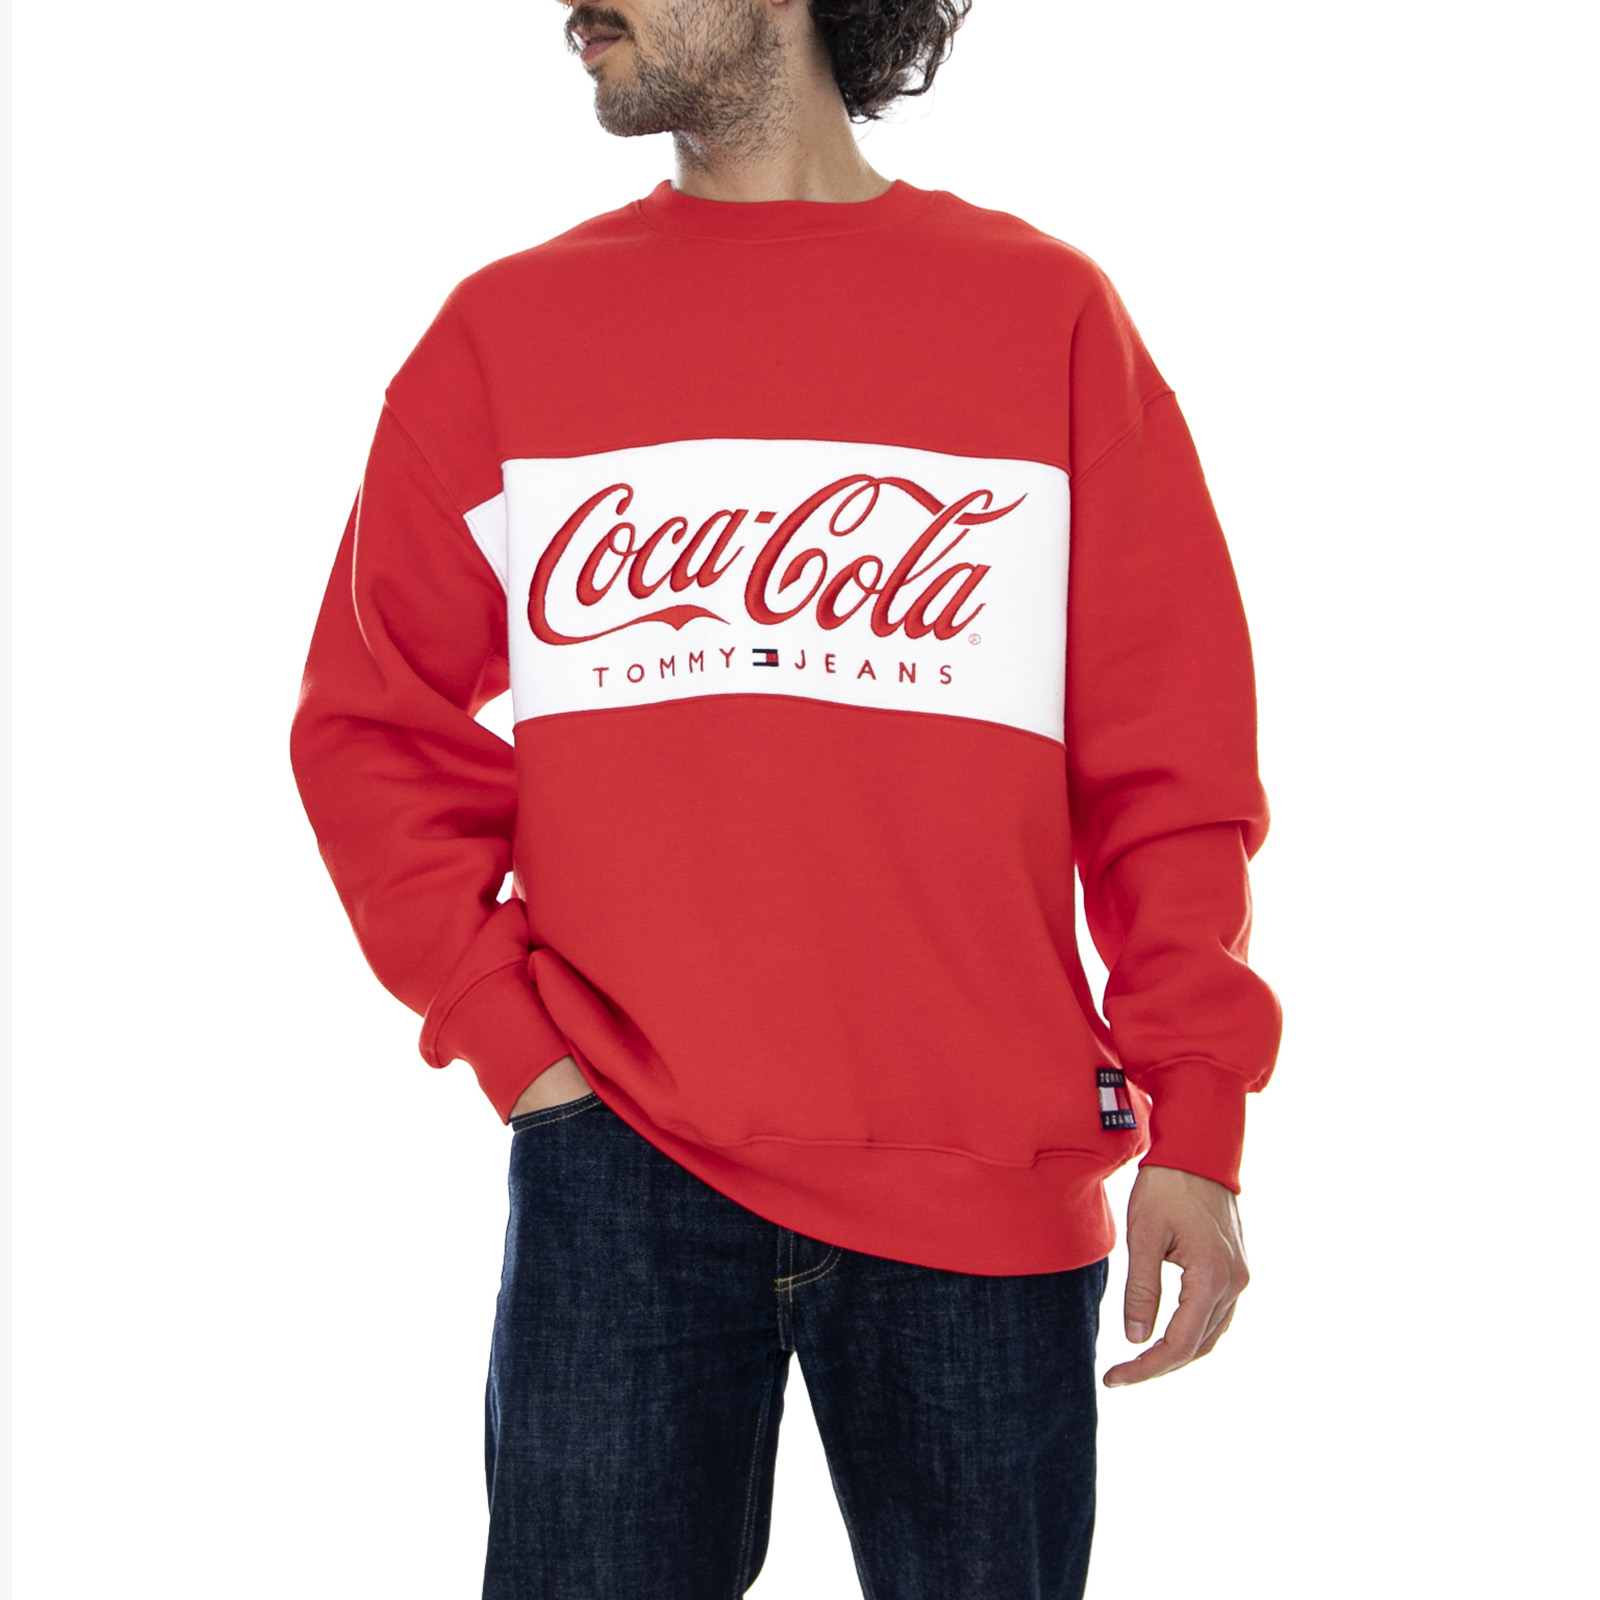 ثابت عامل منجم أسطوانة coca cola 